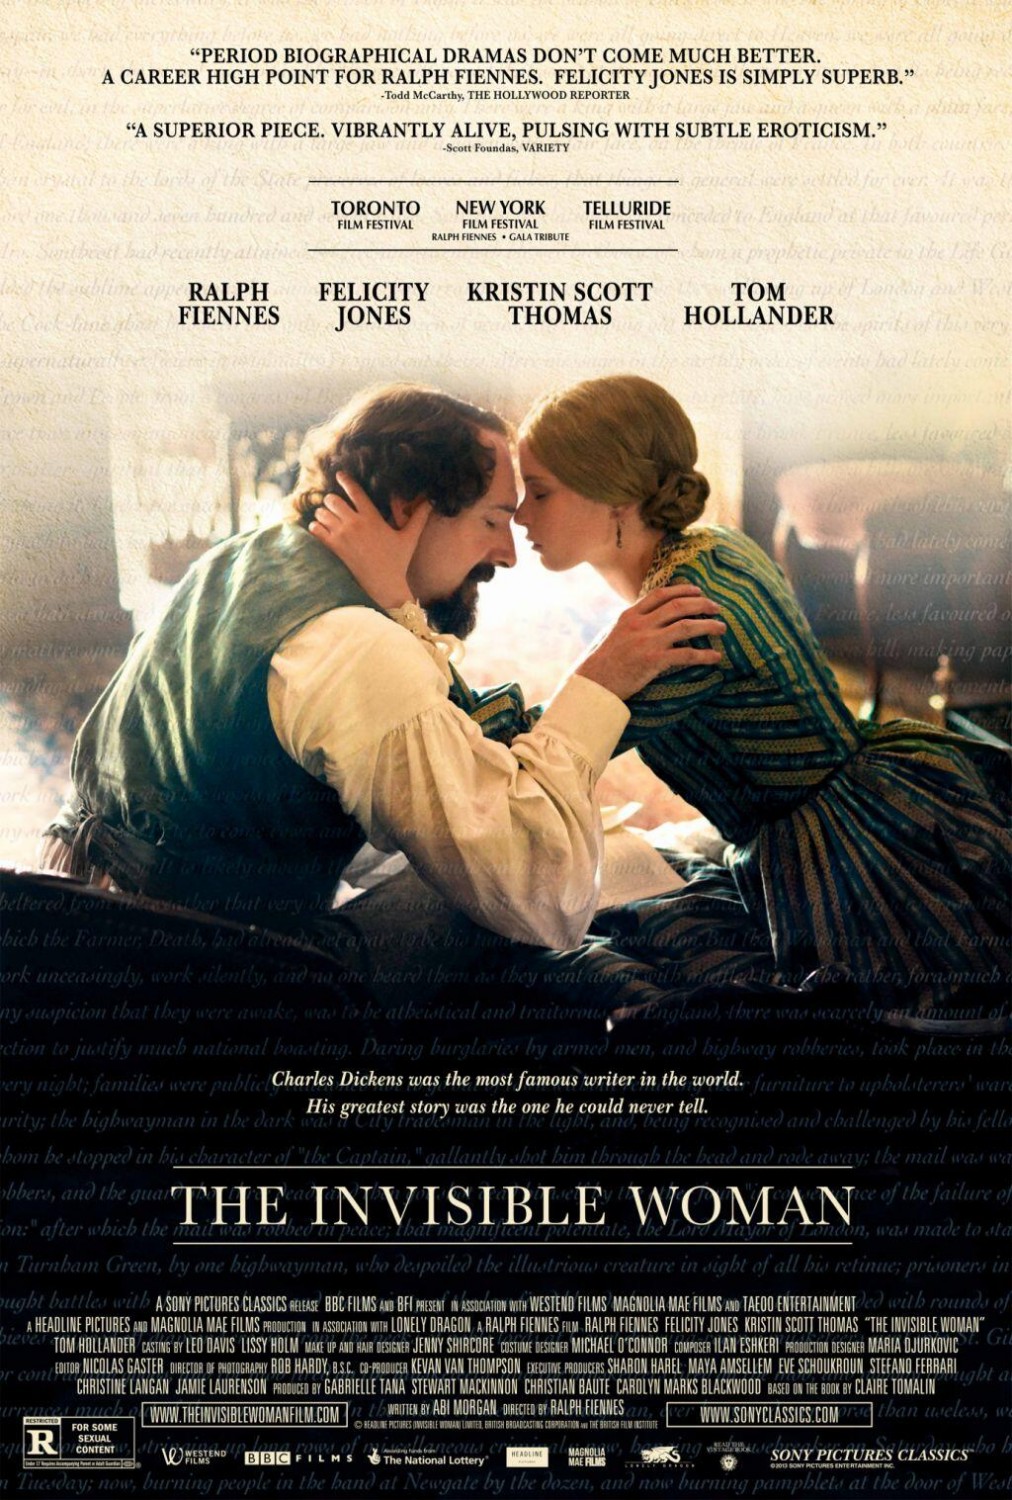 [好雷] 狄更斯的秘密情史 The Invisible Woman (2013 英國片)